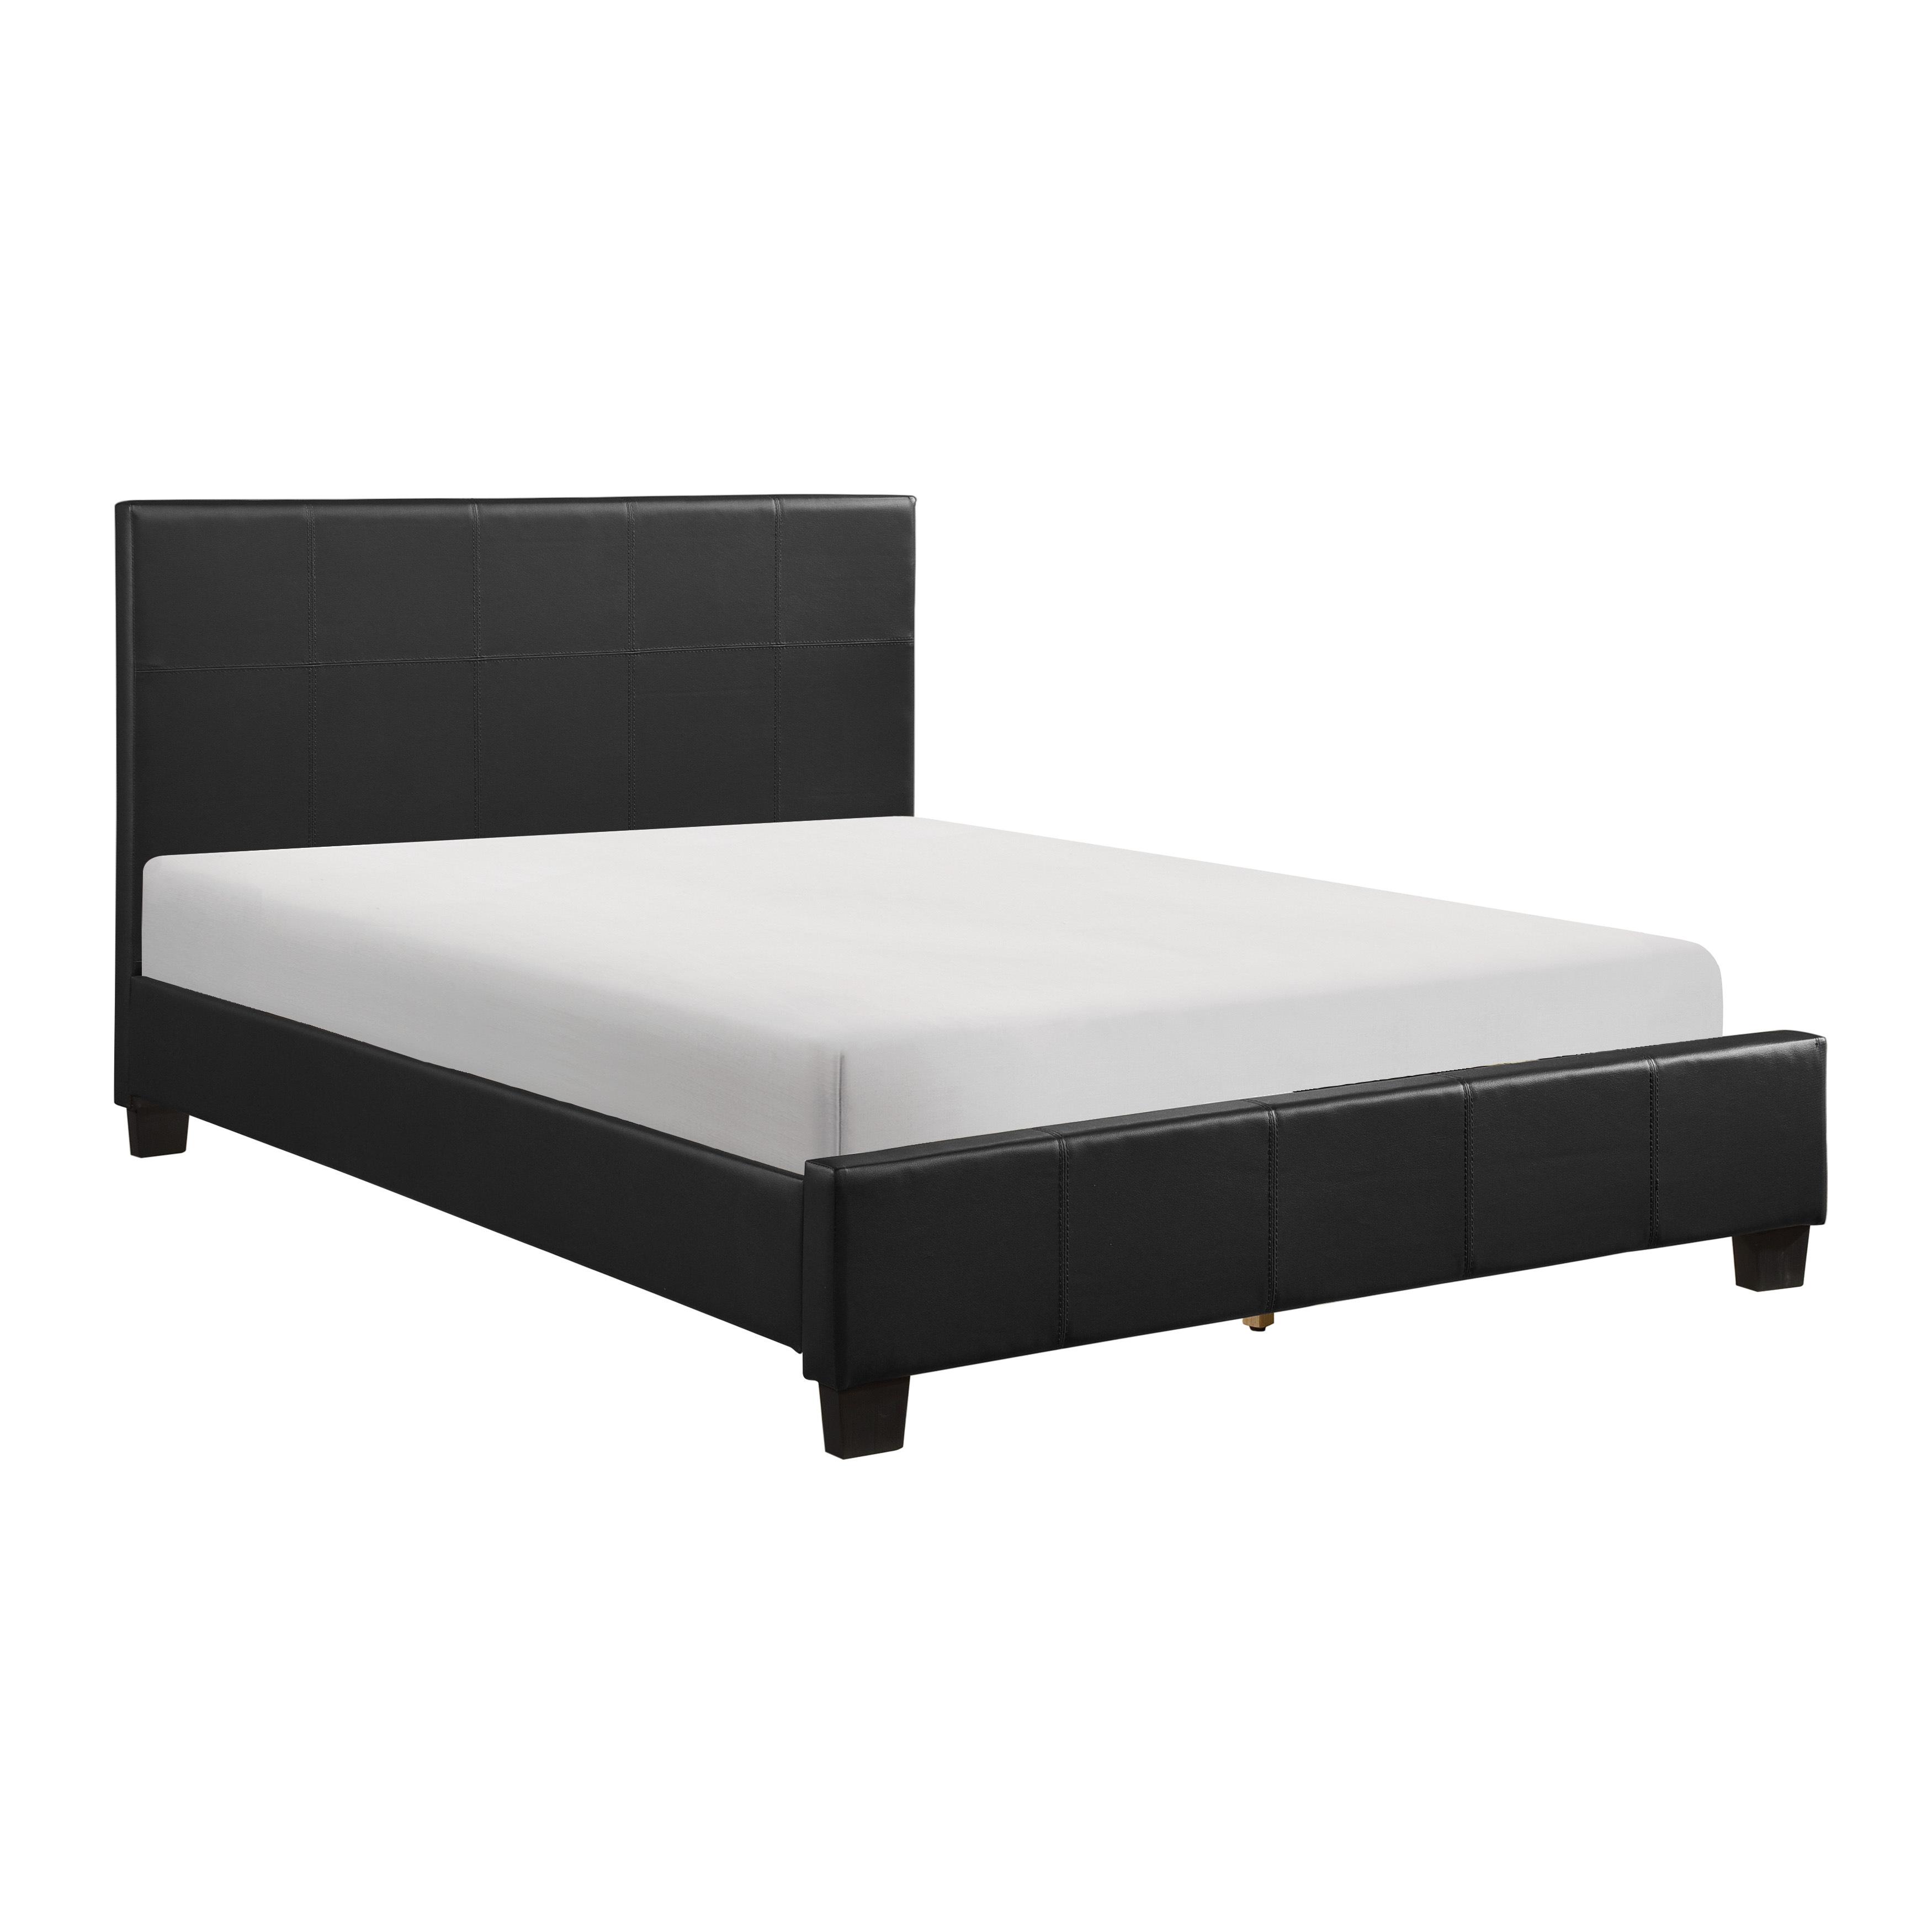 

    
Contemporary Black Wood Full Bedroom Set 5pcs Homelegance 2220F-1* Lorenzi
